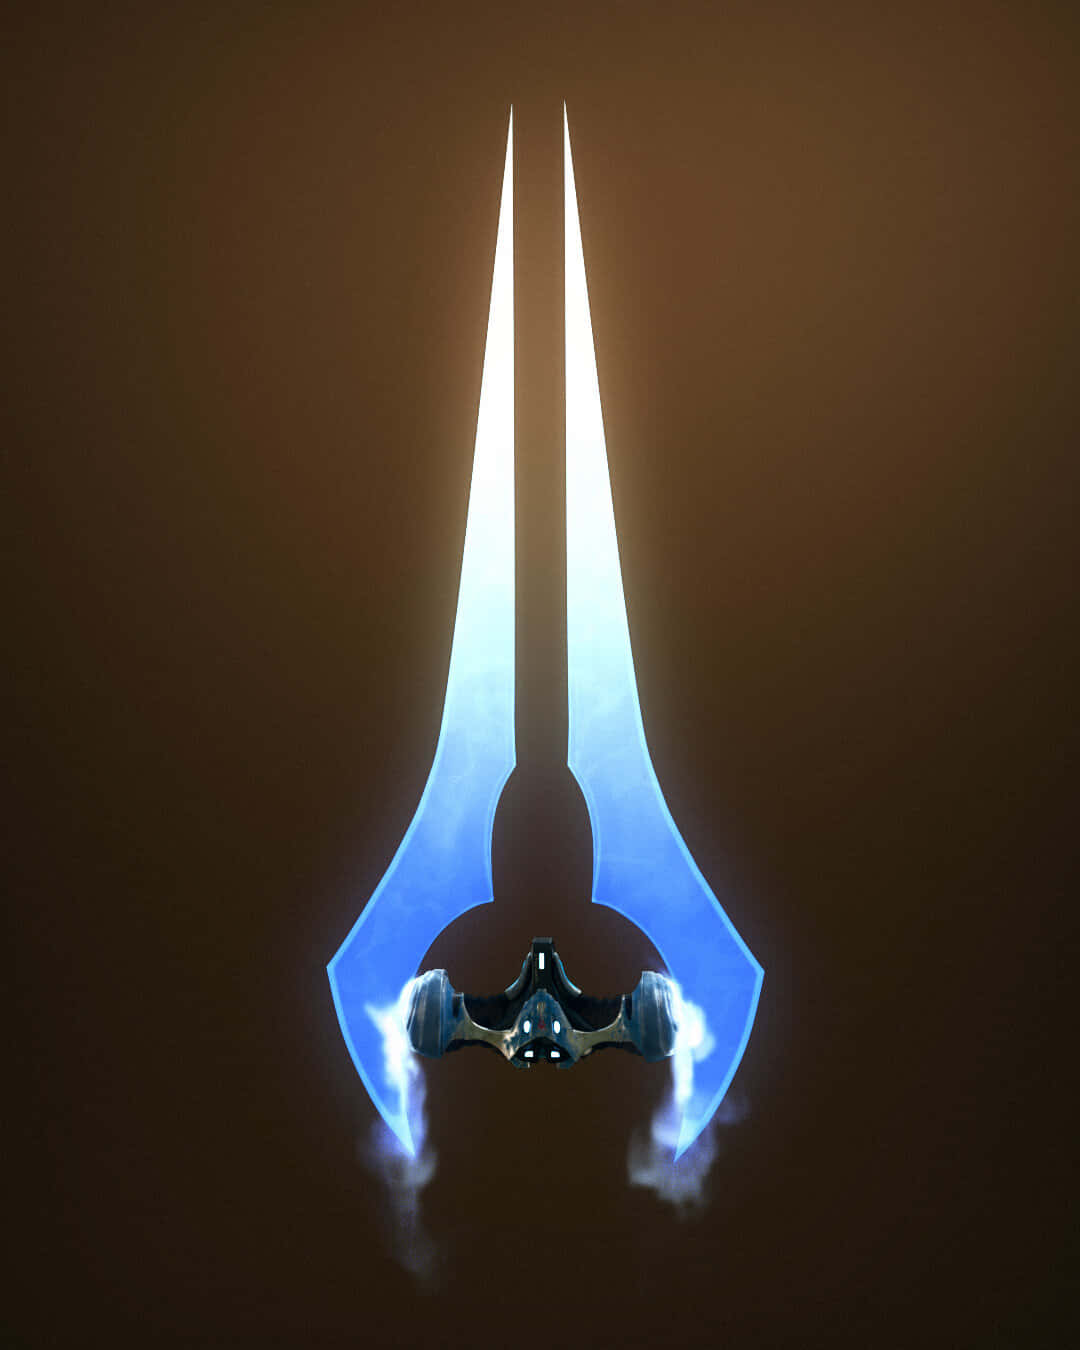 Halo Energy Sword Glowing in the Dark Wallpaper